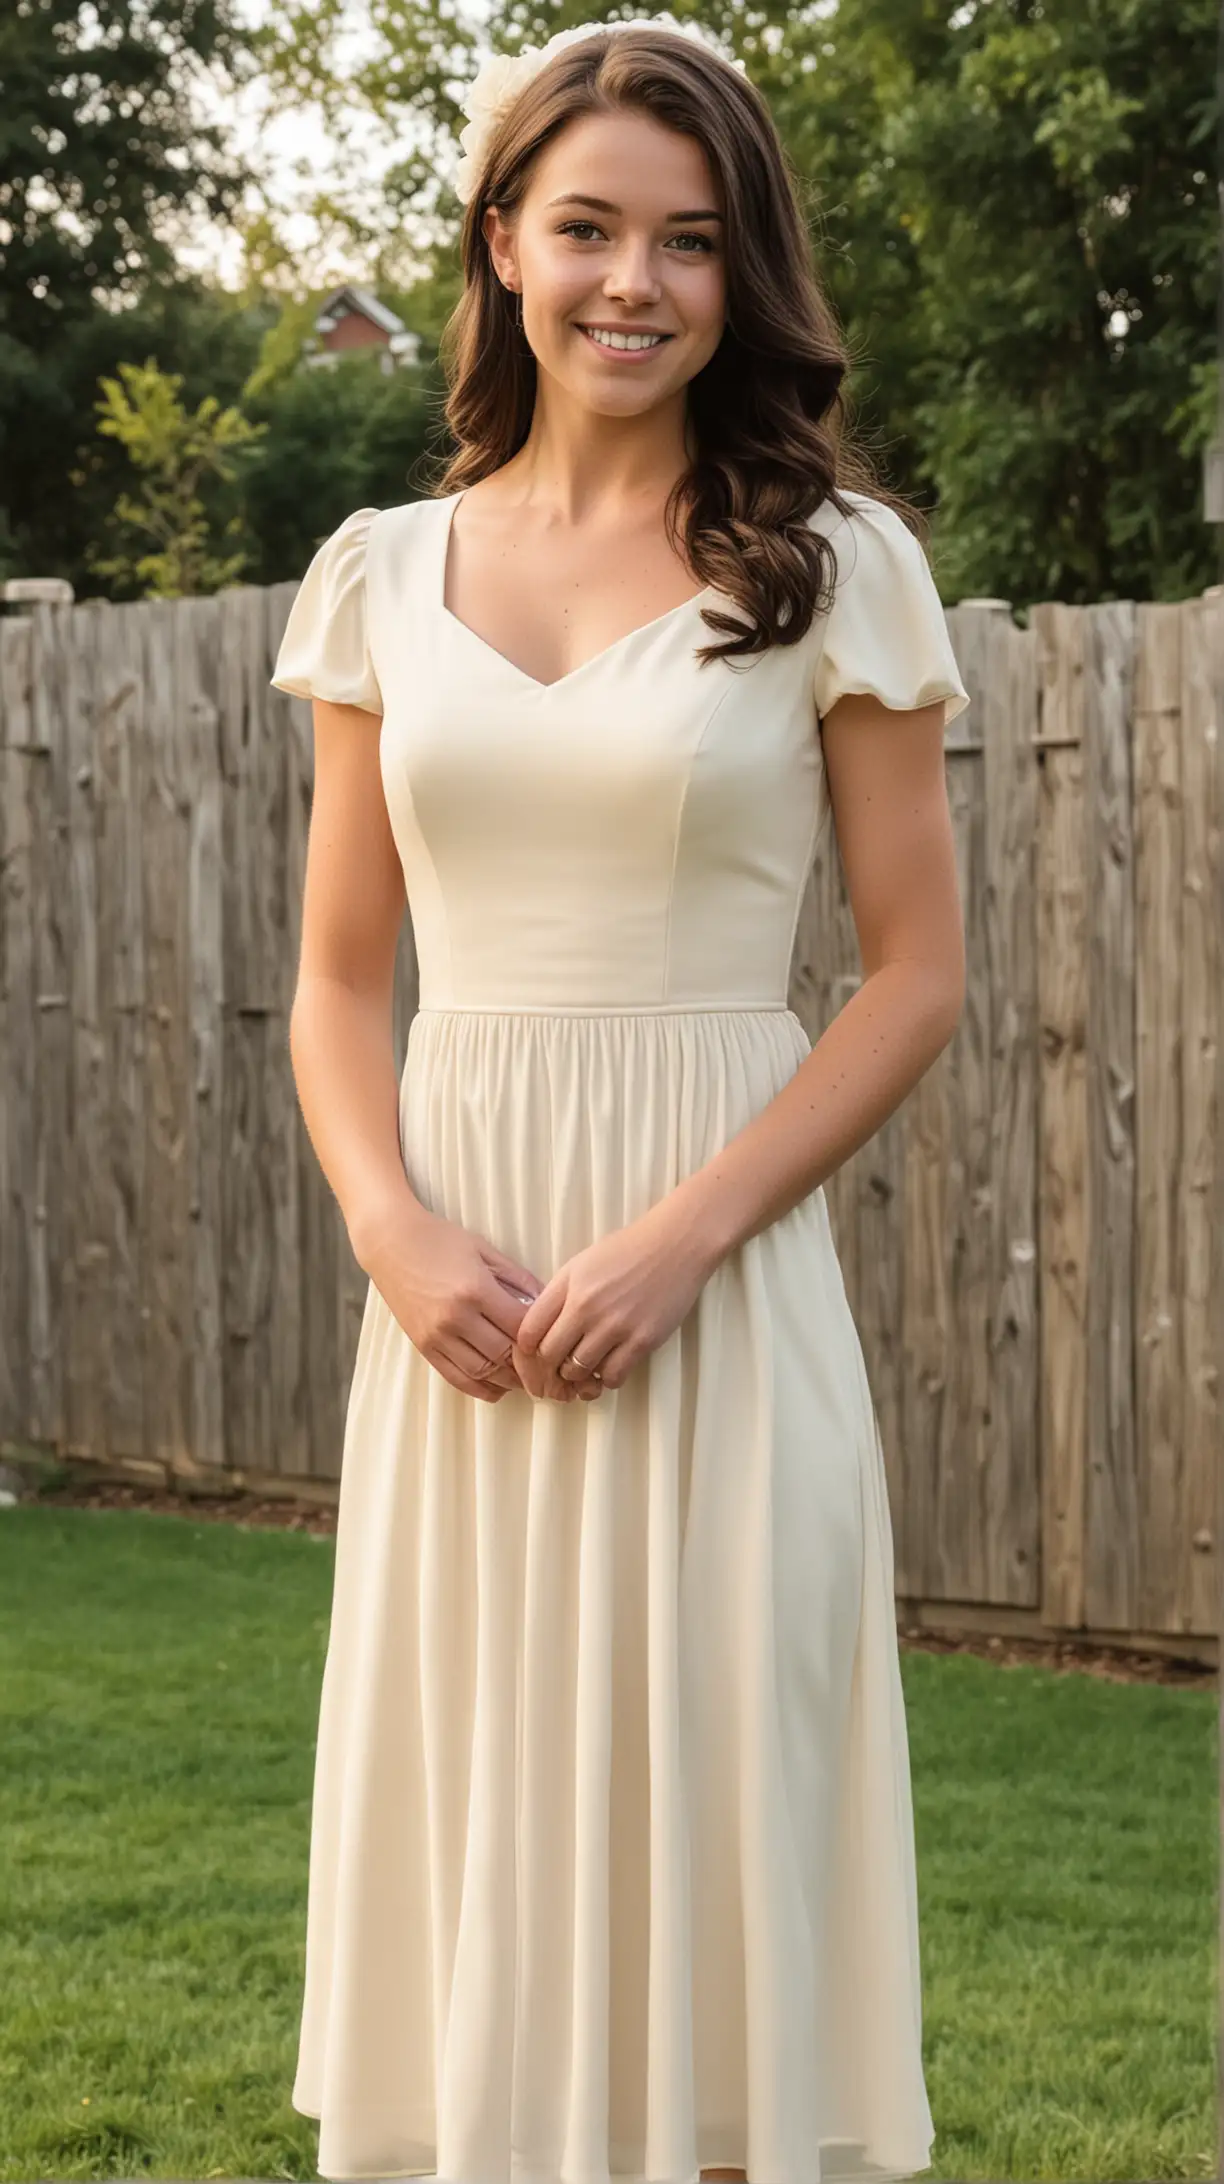 Teenage Bridesmaid Jordan Claire Robbins in Cream Dress with Dark Brunette Hair